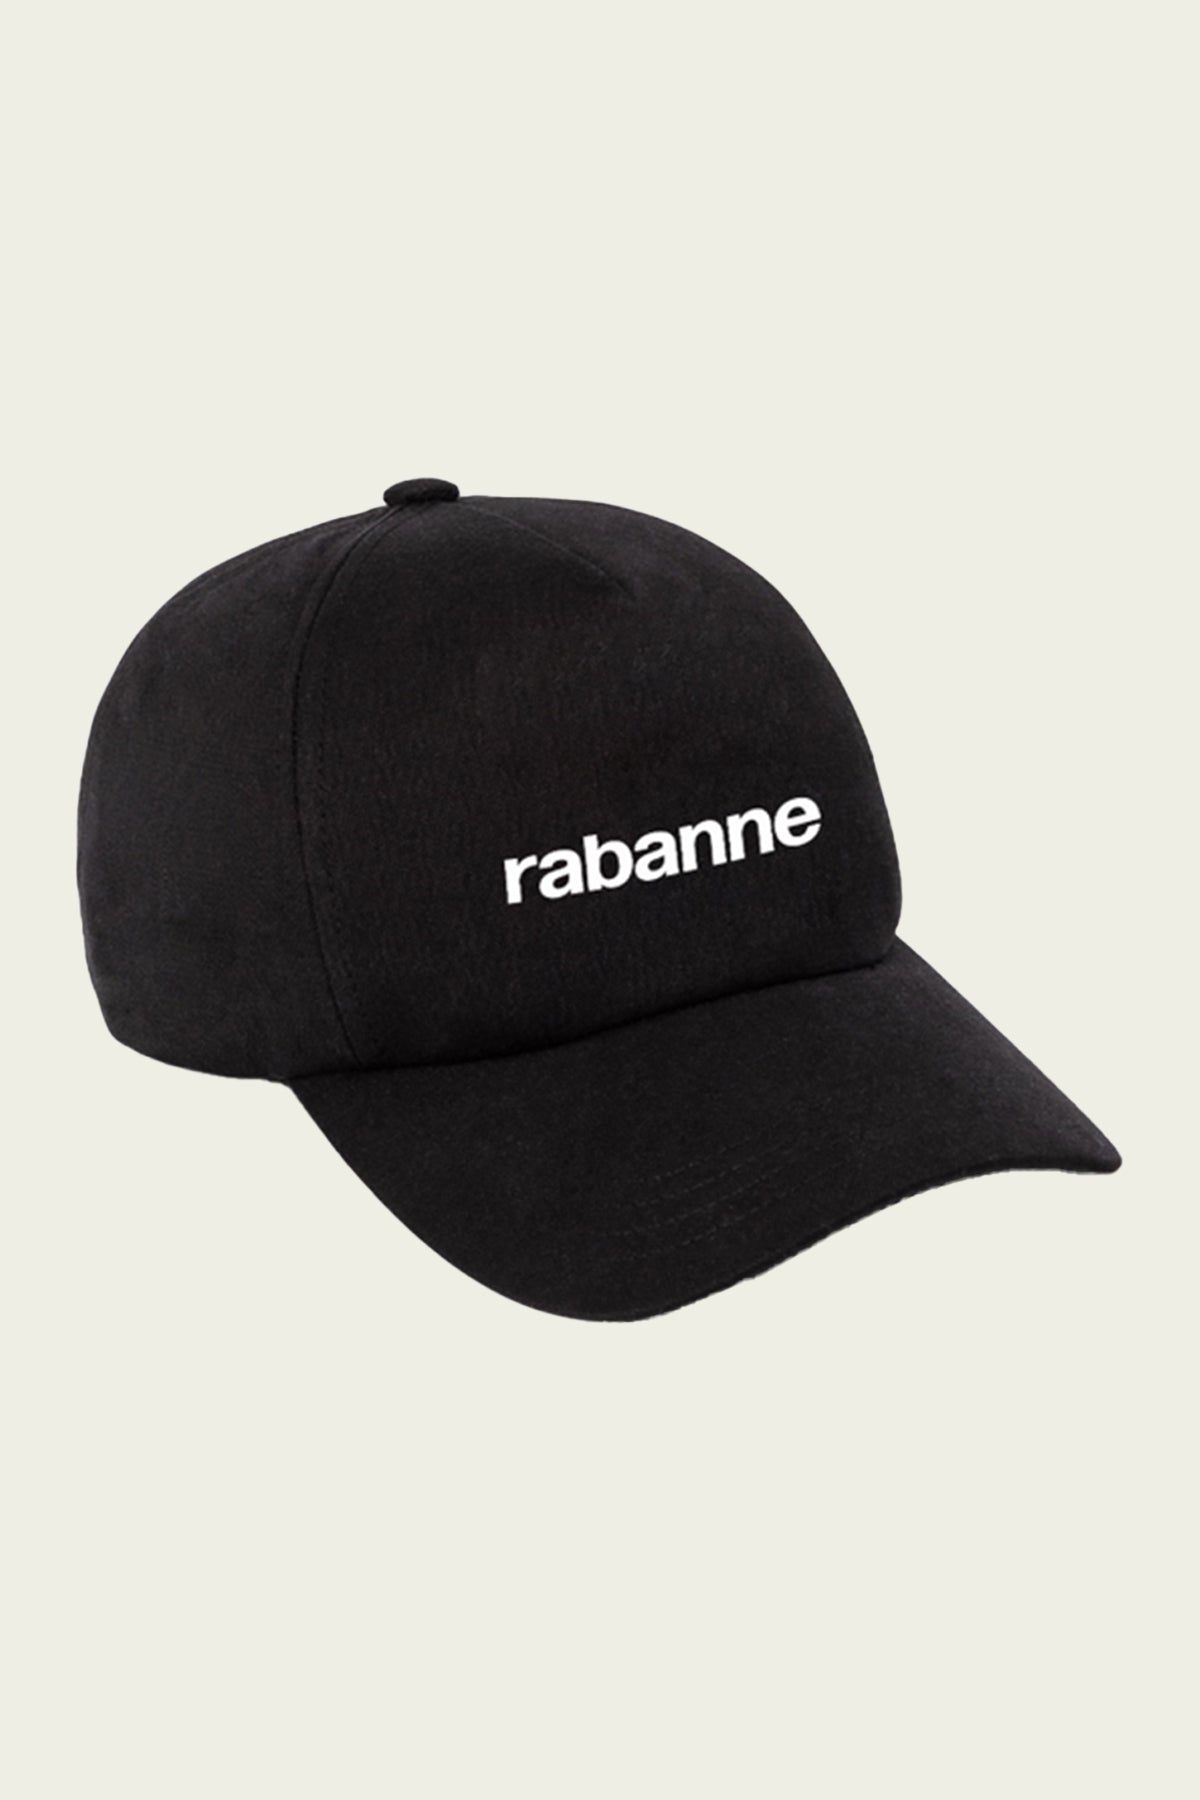 Rabanne Logo Baseball Cap in Black - shop-olivia.com